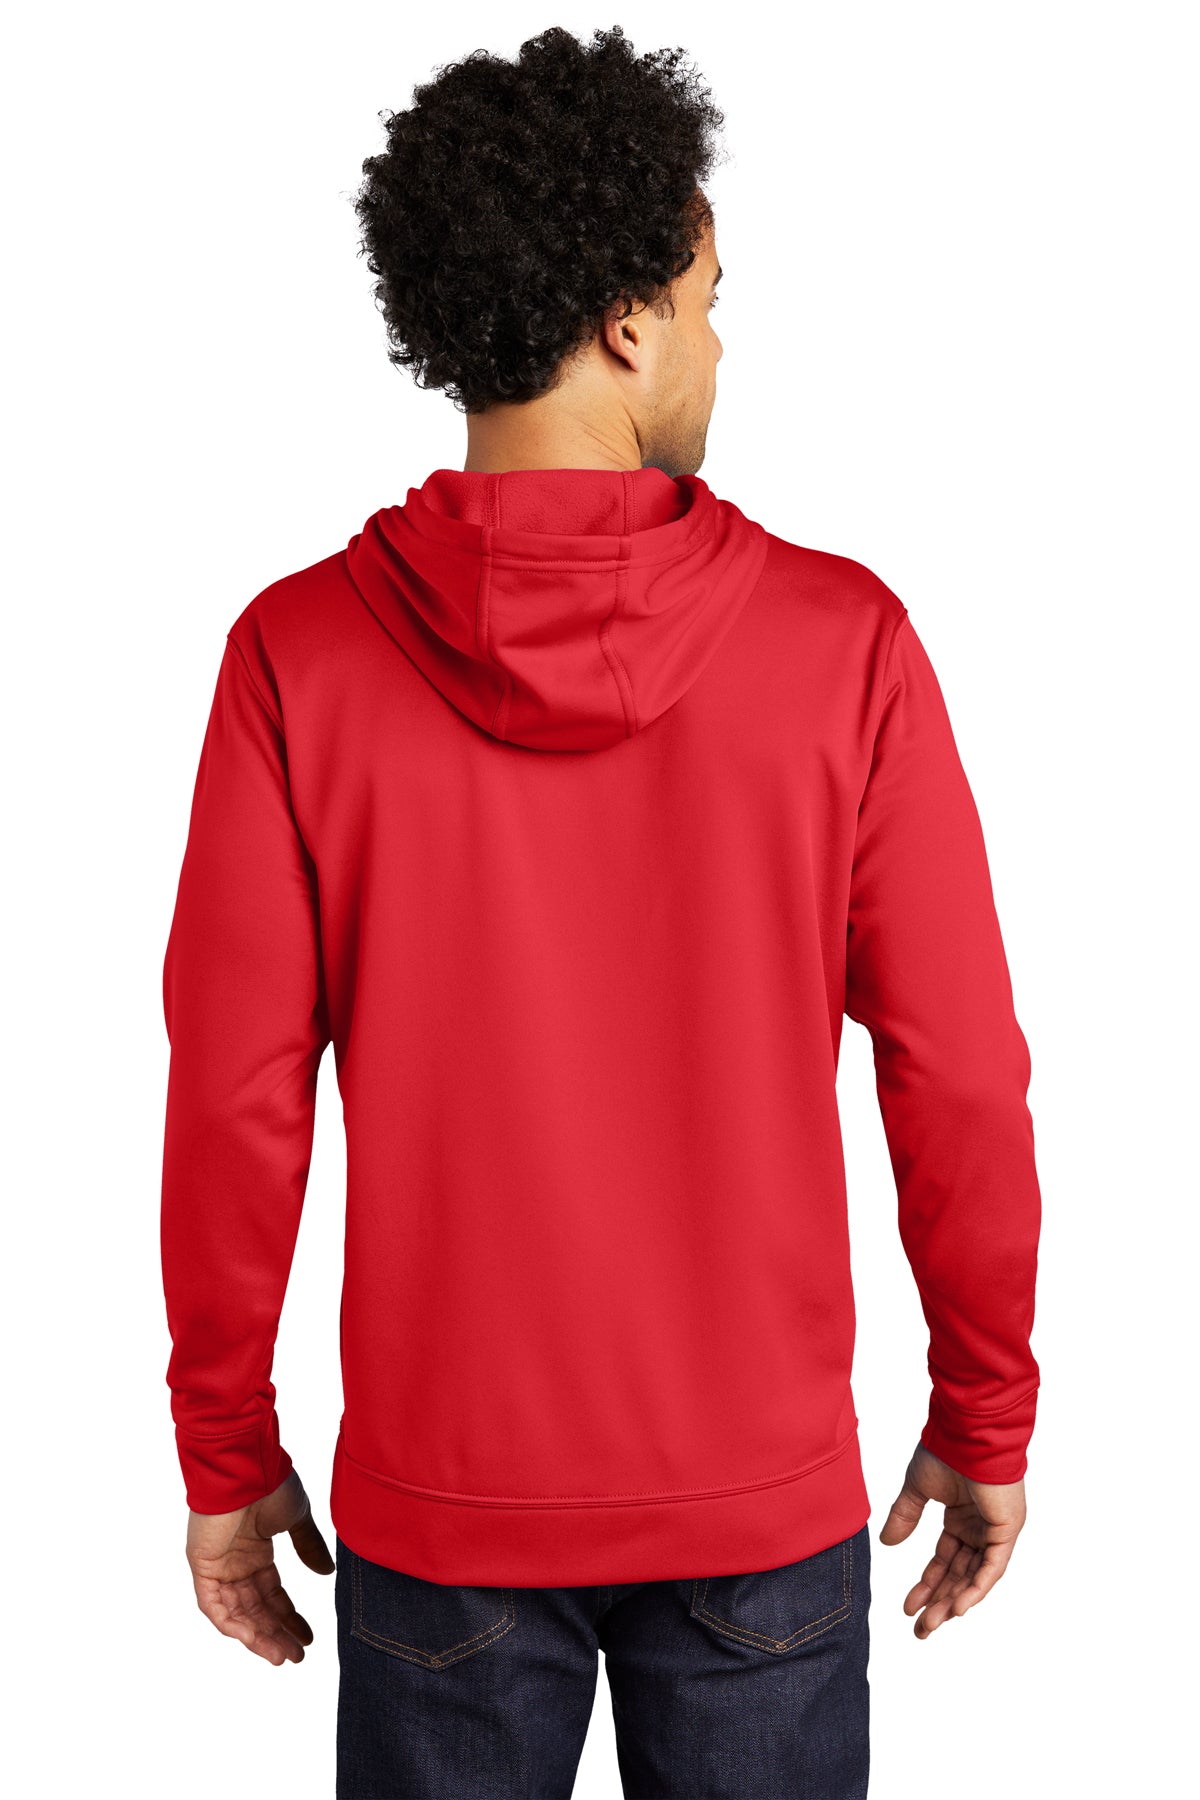 Port & Company Performance Branded Fleece Hoodies, Red